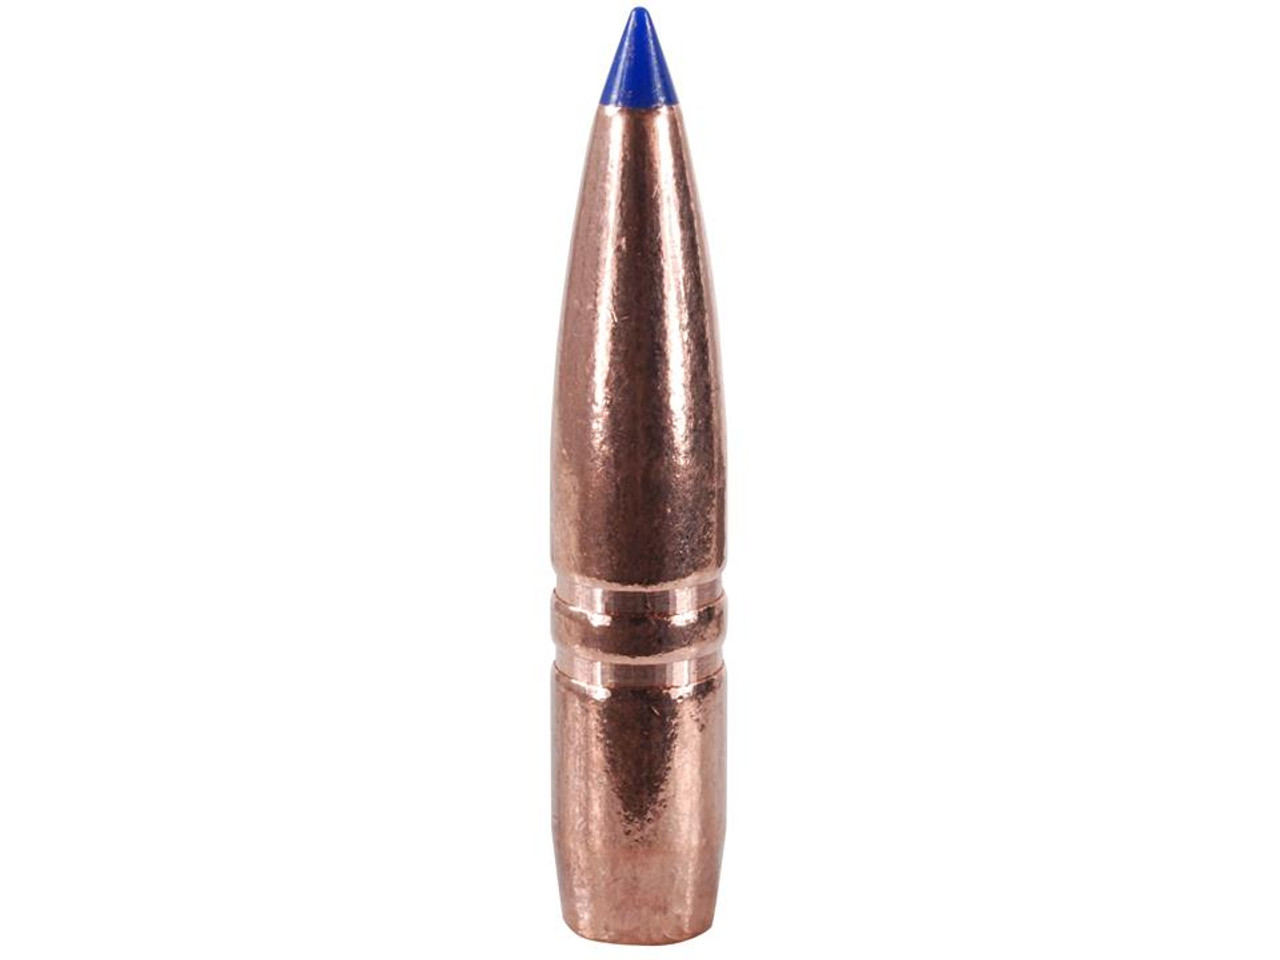 Barnes LRX Long-Range Hunting Bullets 243 Caliber, 6mm (243 Diameter) 95 Grain LRX Boat Tail Lead-Free Box of 50